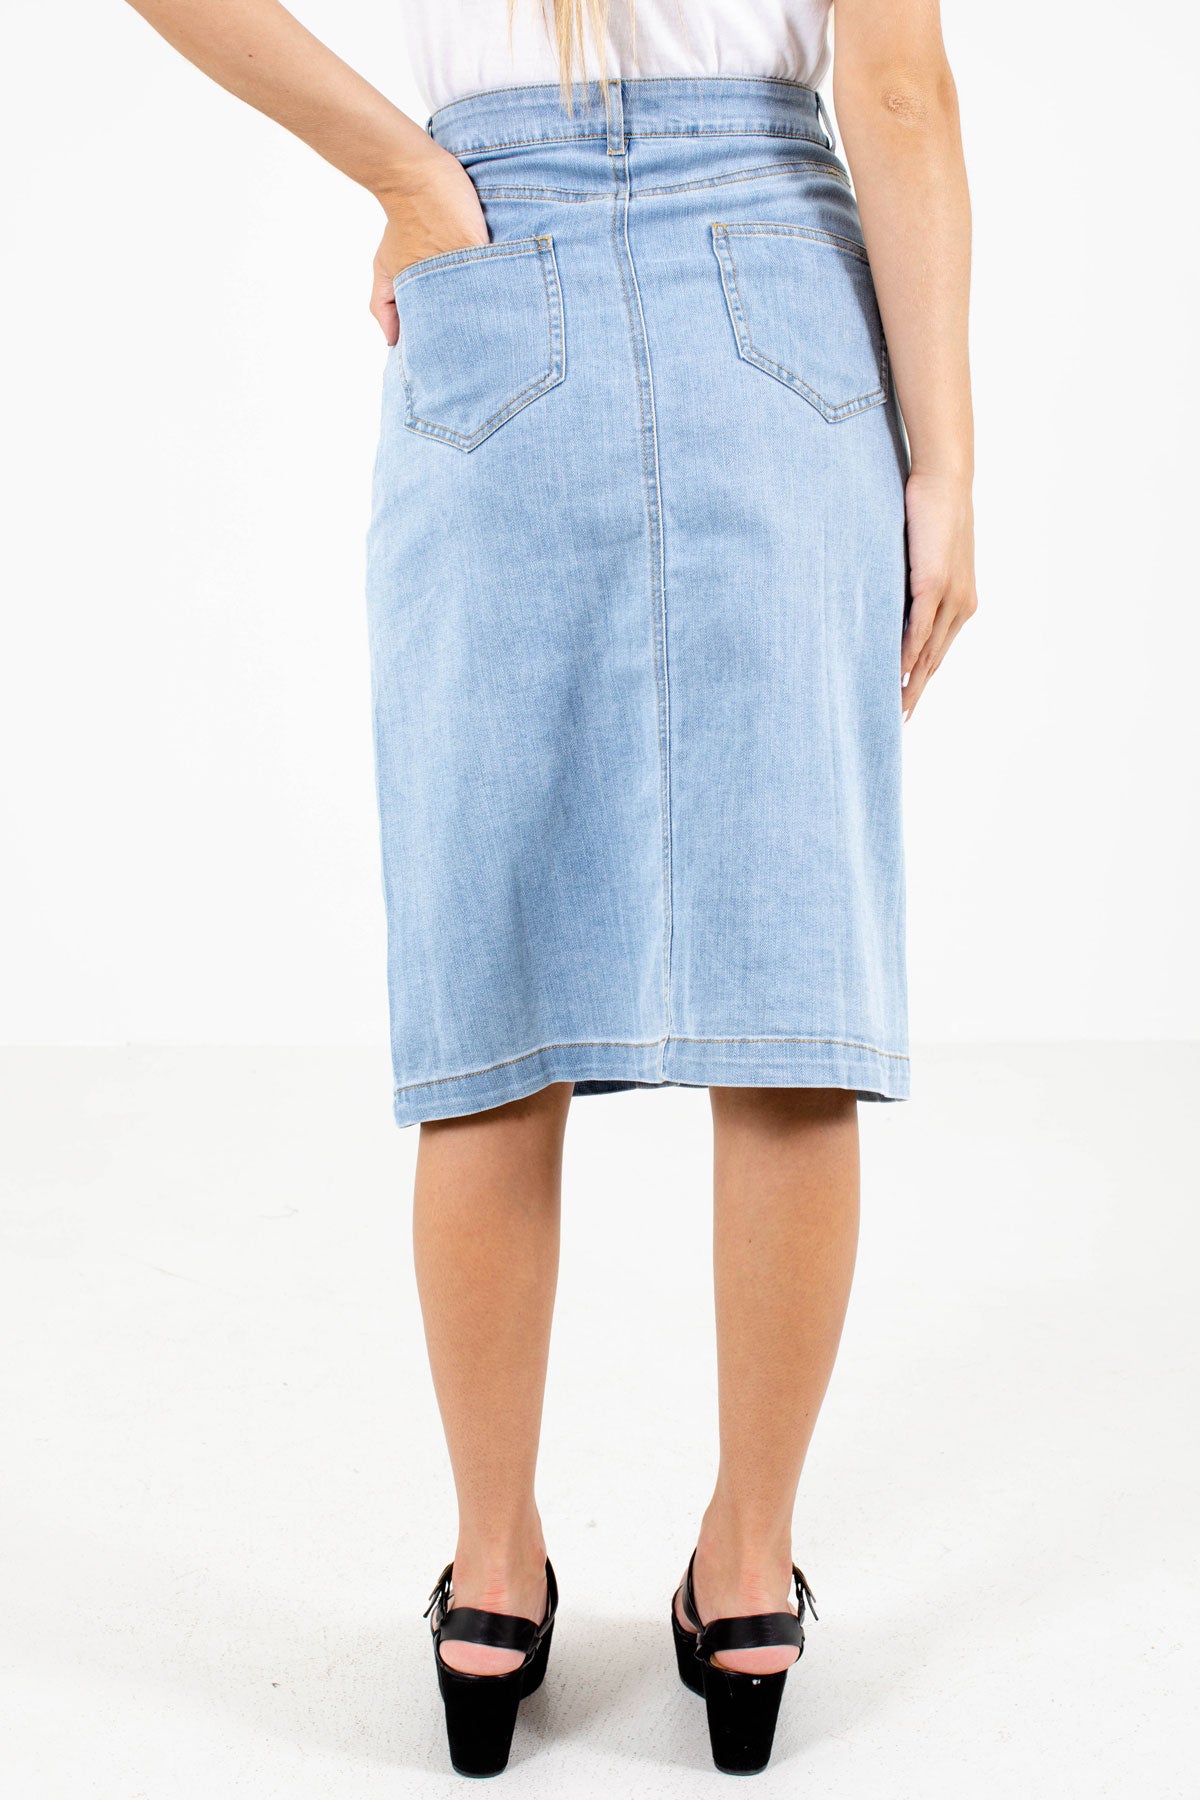 Women's Blue Denim Knee-Length Boutique Skirt with Pockets